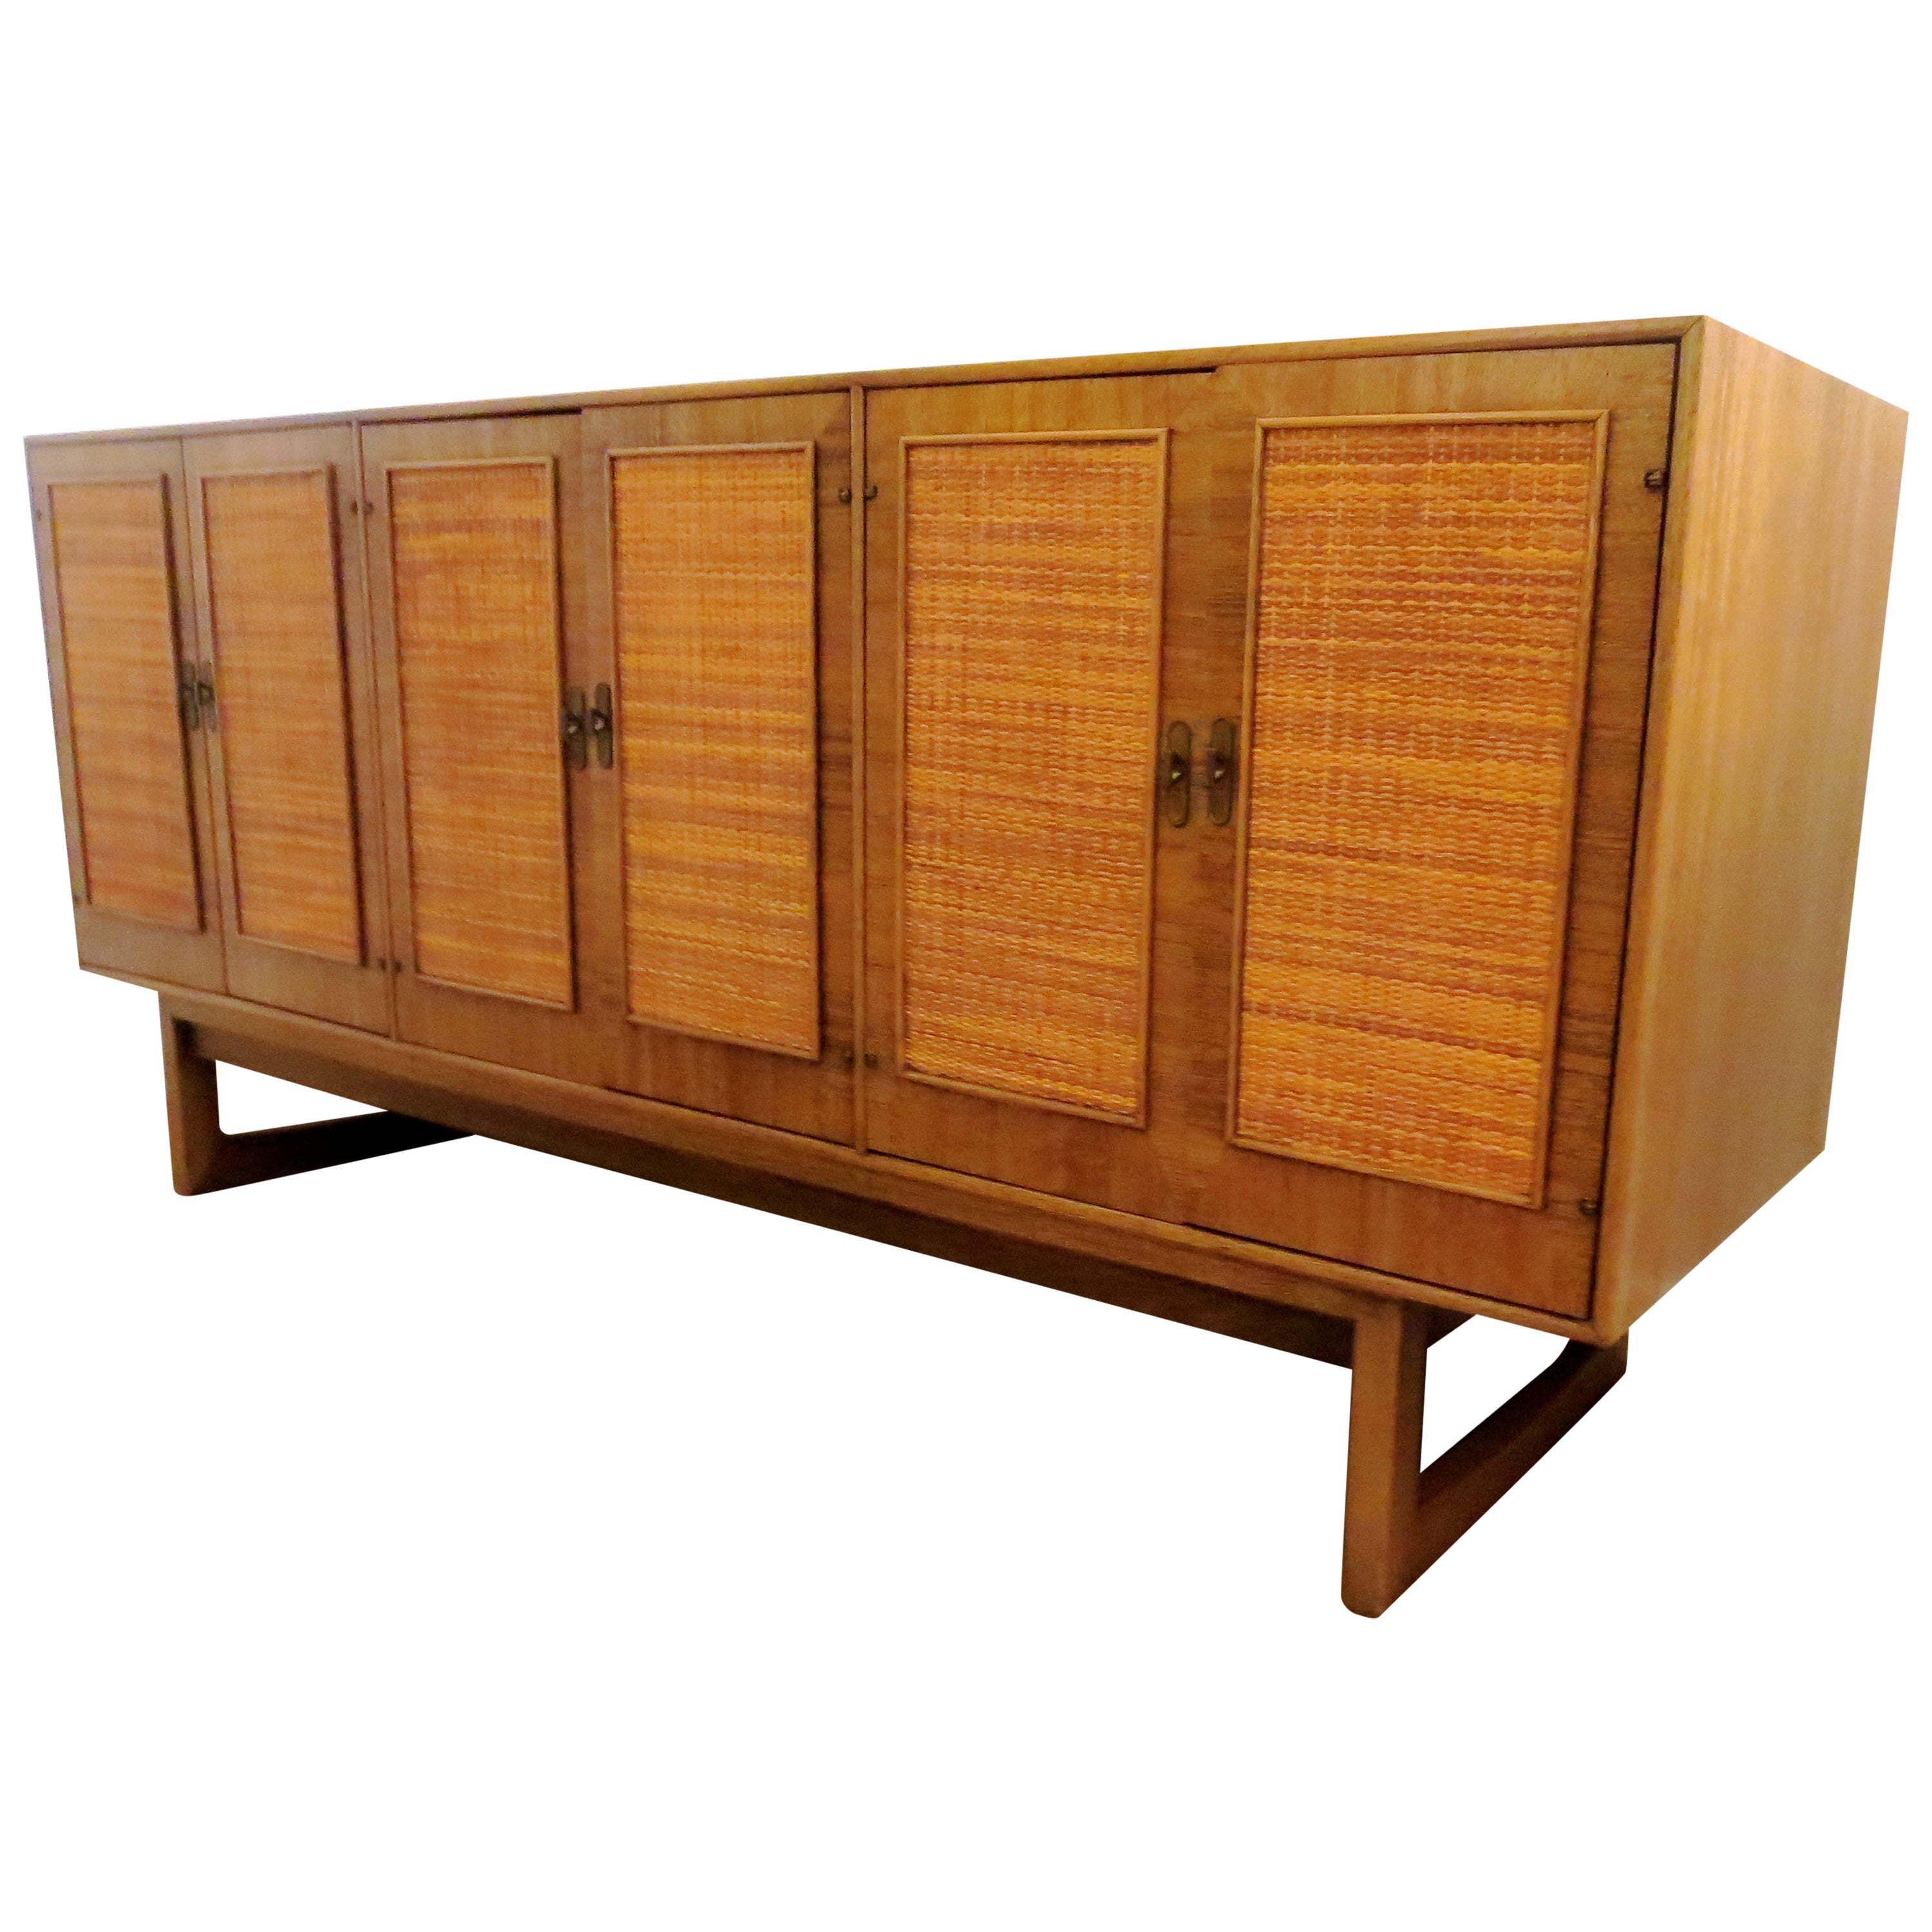 1950s American modern mahogany & cane front door panels sideboard